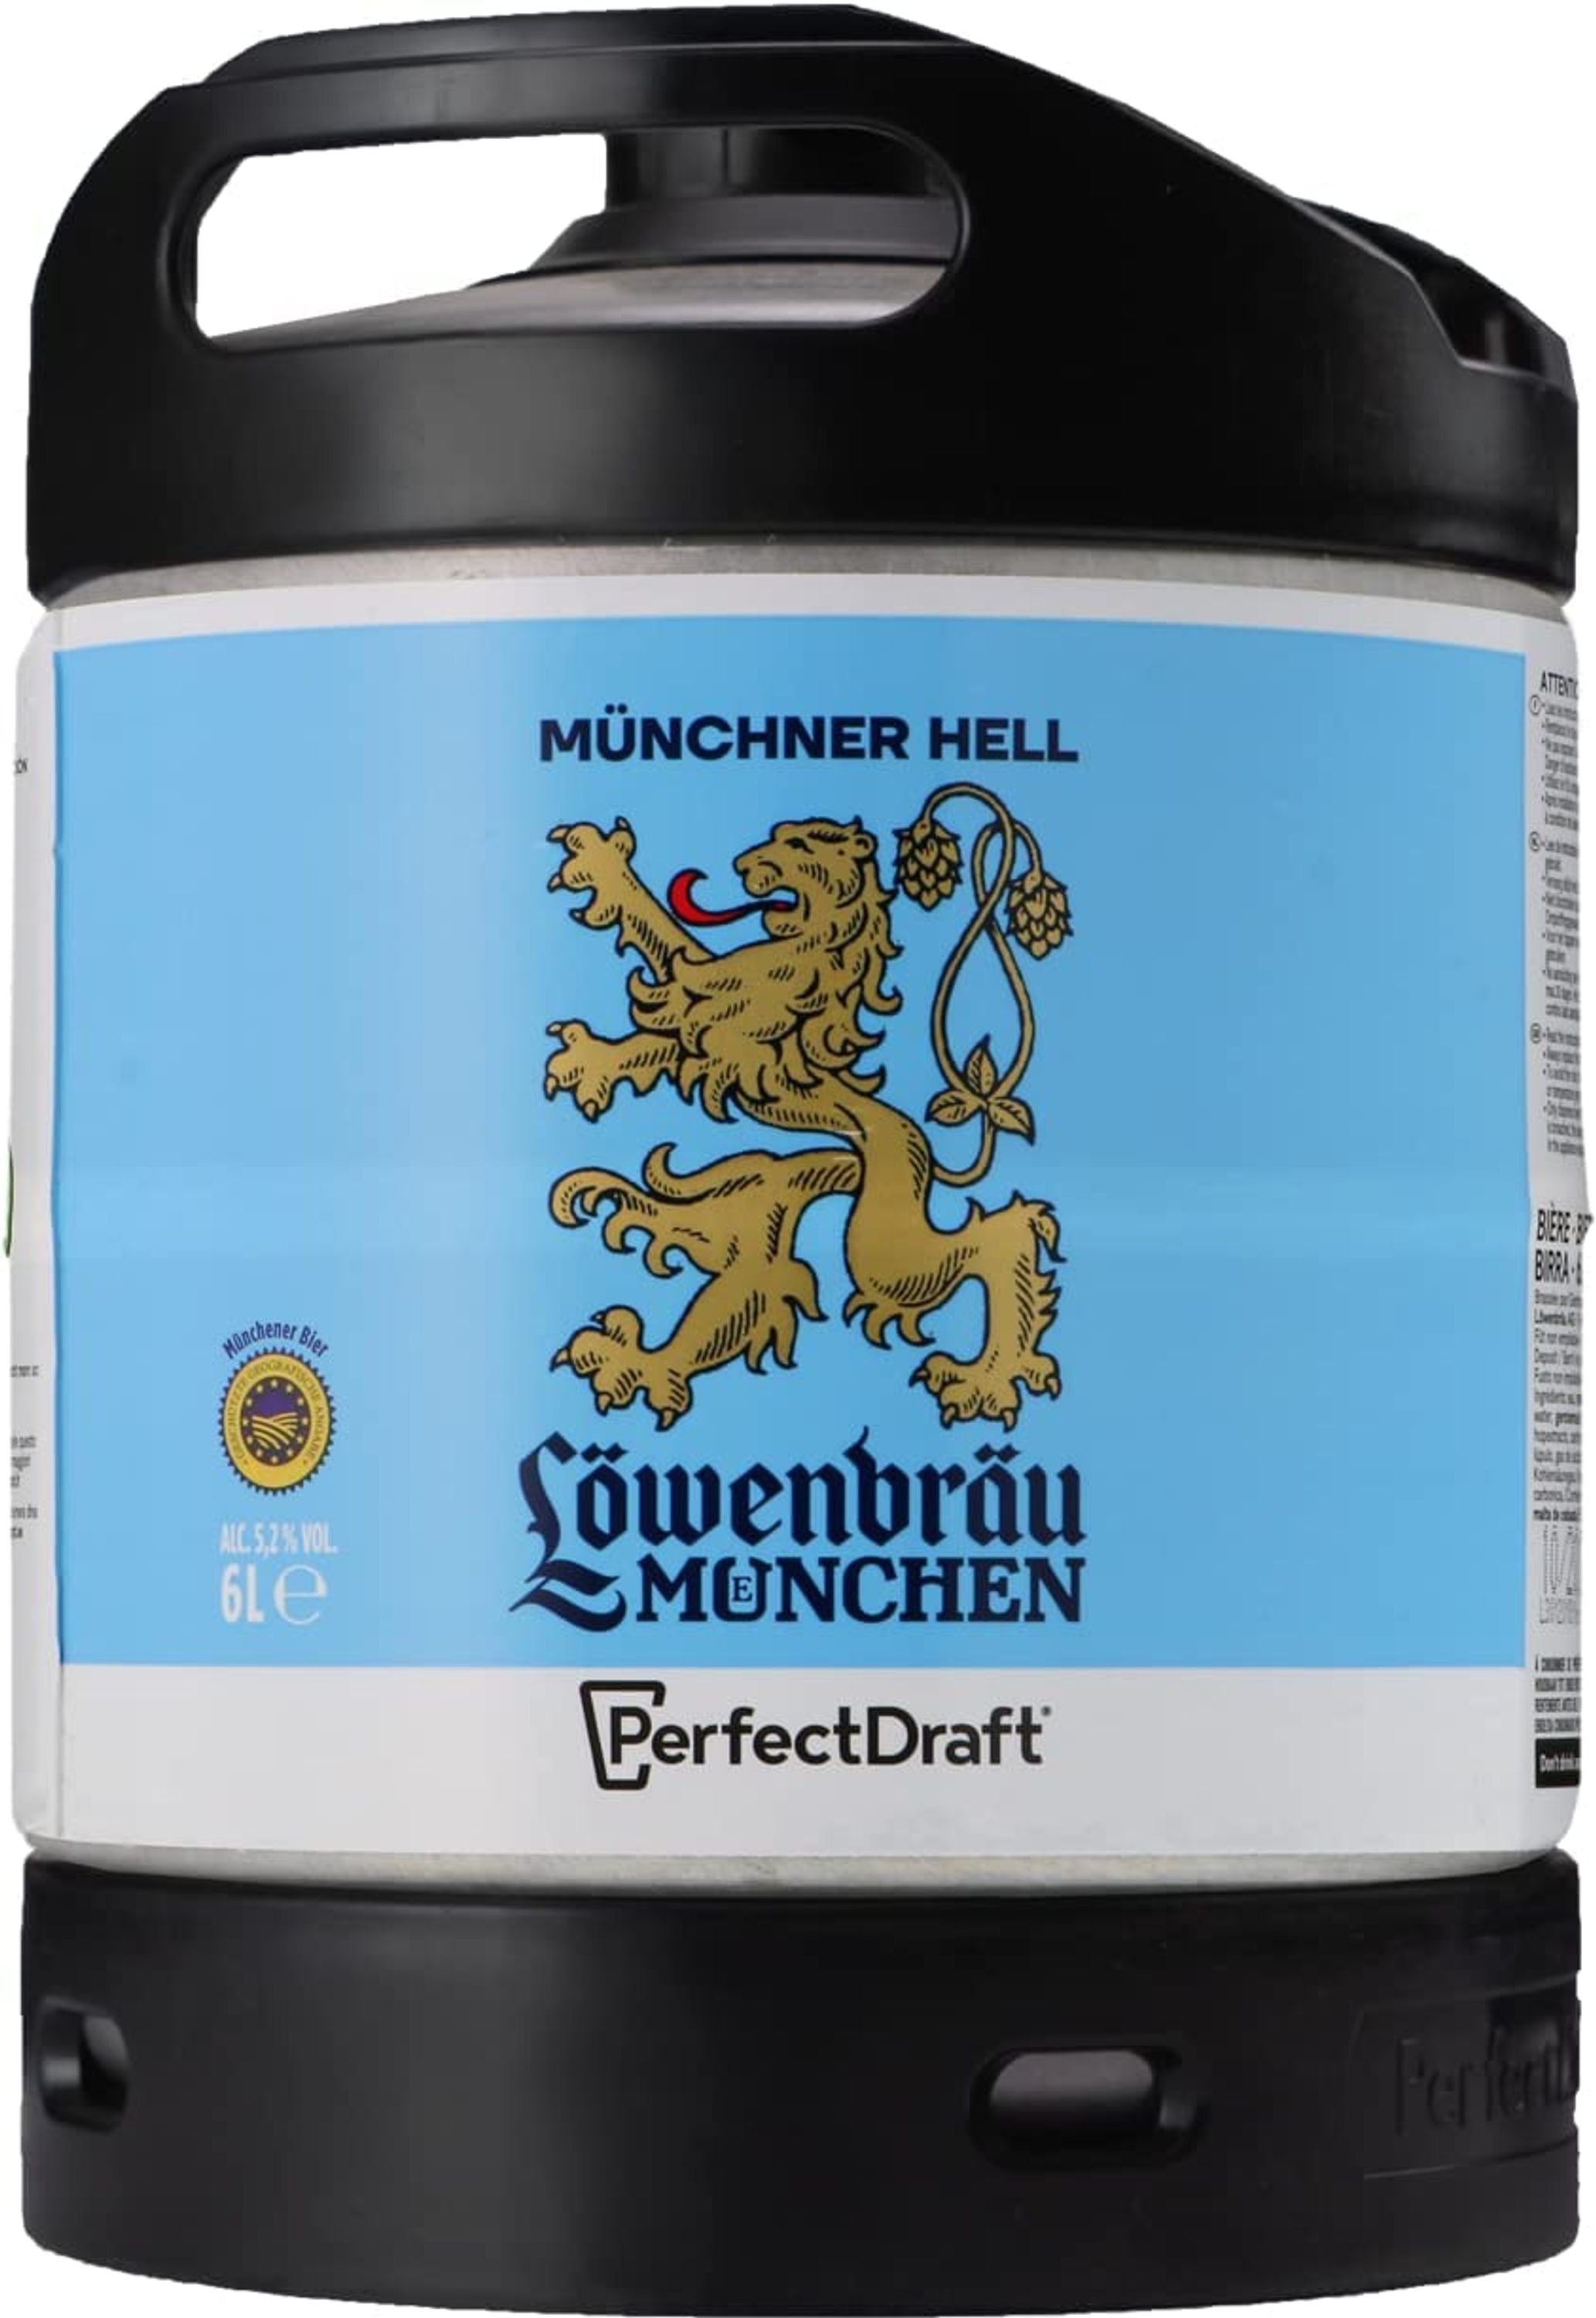 Löwenbräu Munich Hell Perfect Draft 2x6.0l, alc. 5.2% by volume